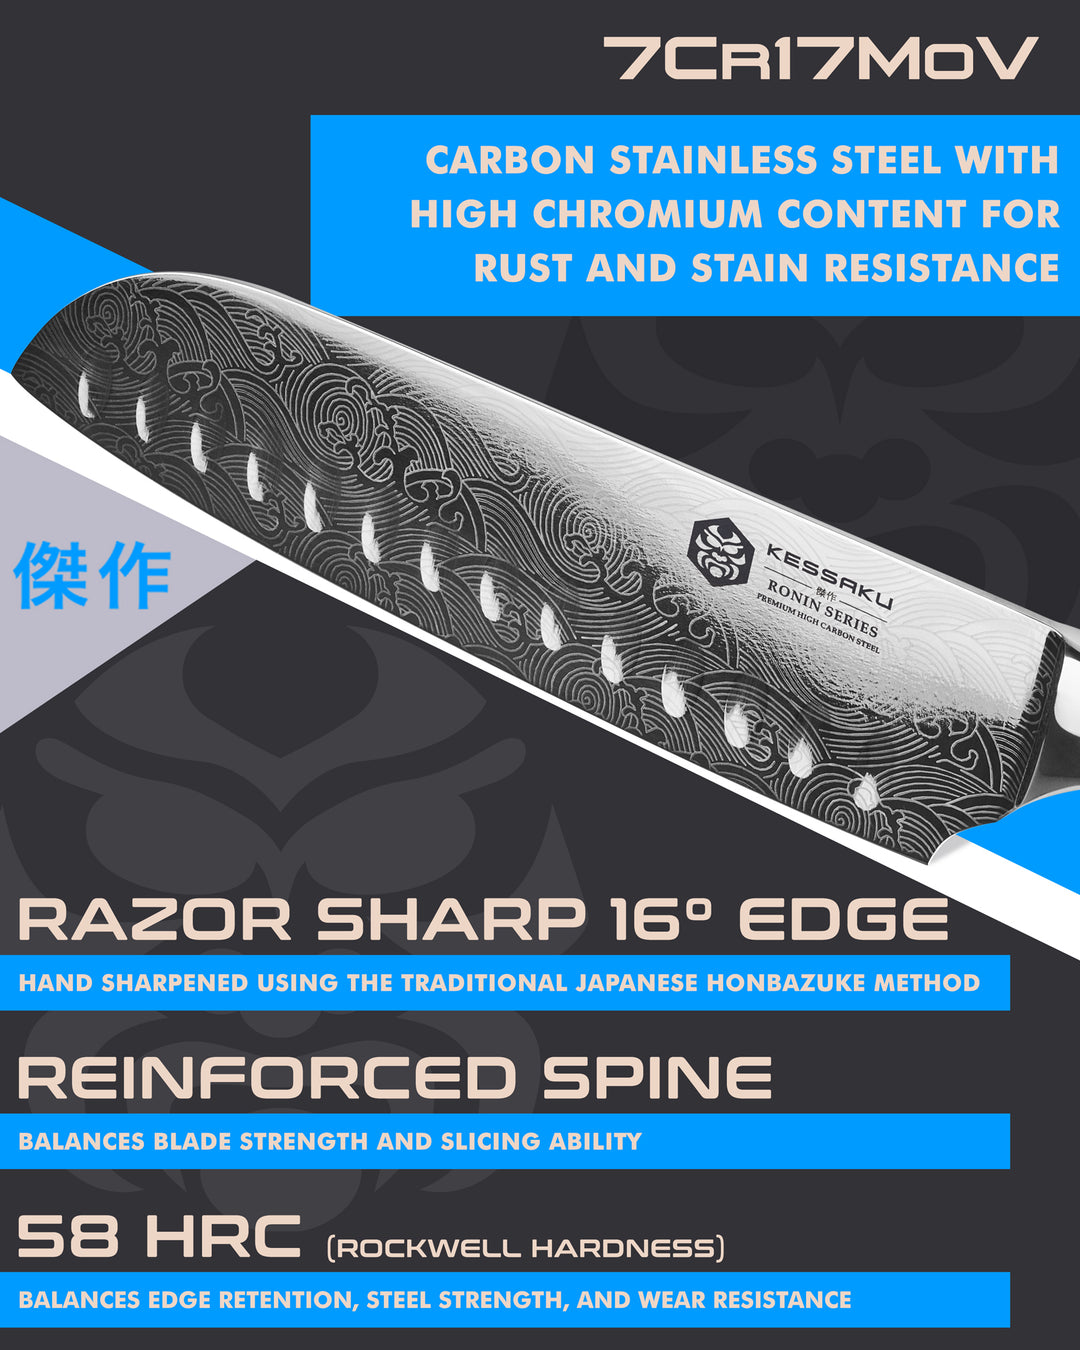 Kessaku Ronin Santoku Knife blade features: 7Cr17MoV steel, 58 HRC, 16 degree edge, reinforced spine